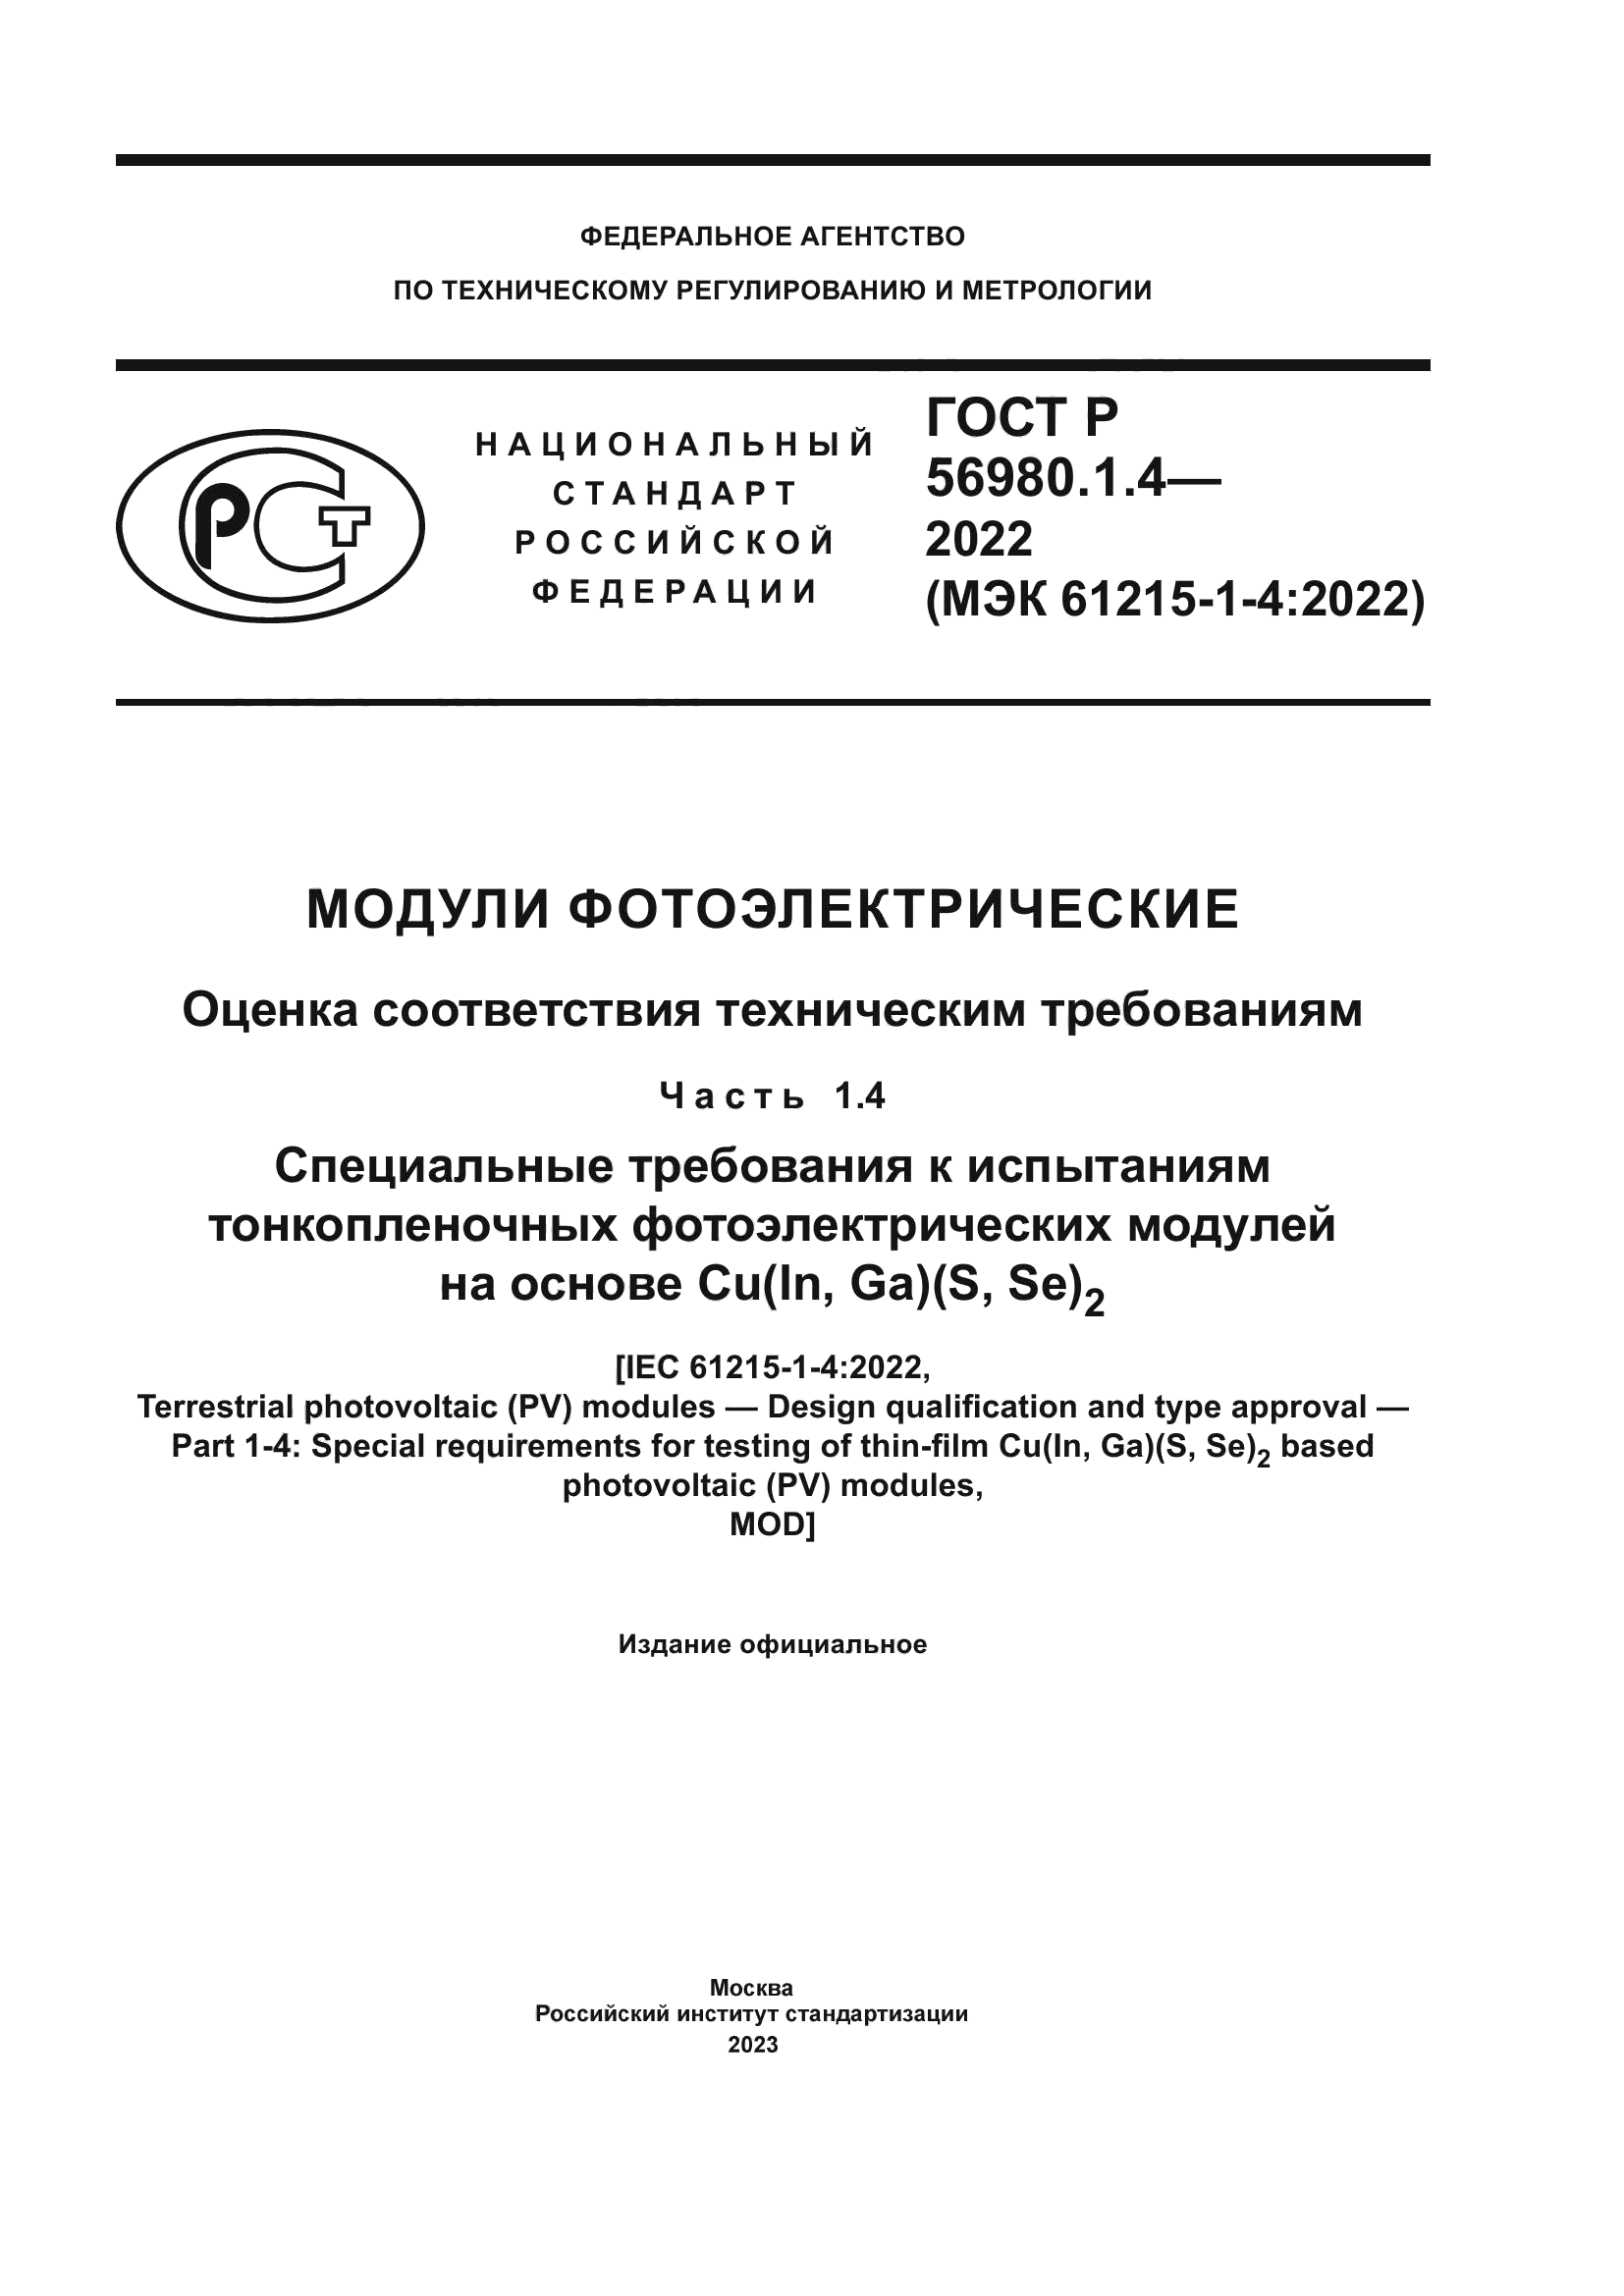 ГОСТ Р 56980.1.4-2022